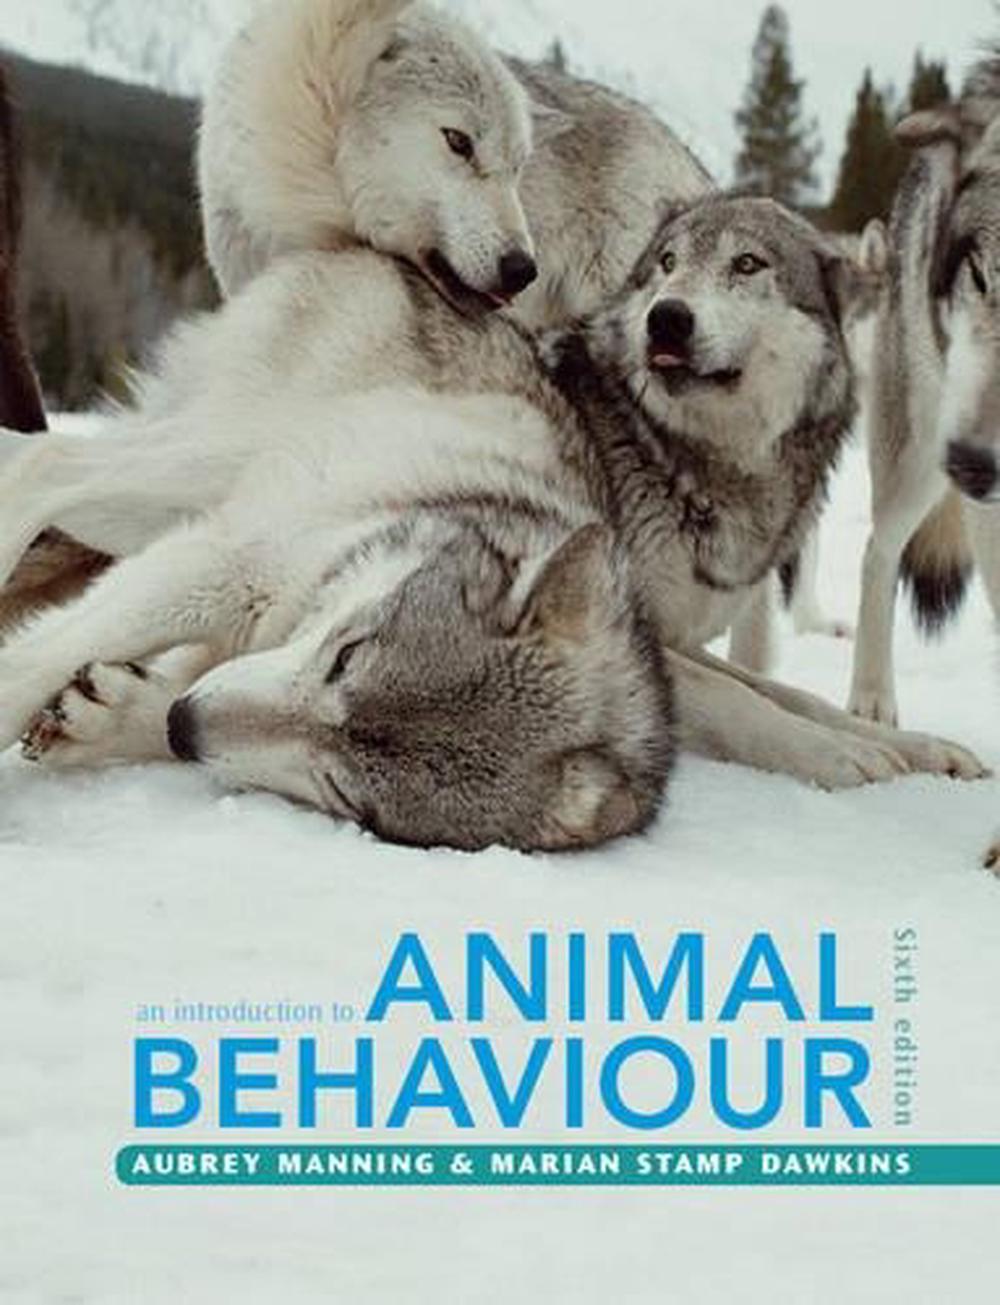 animal behavior essay titles